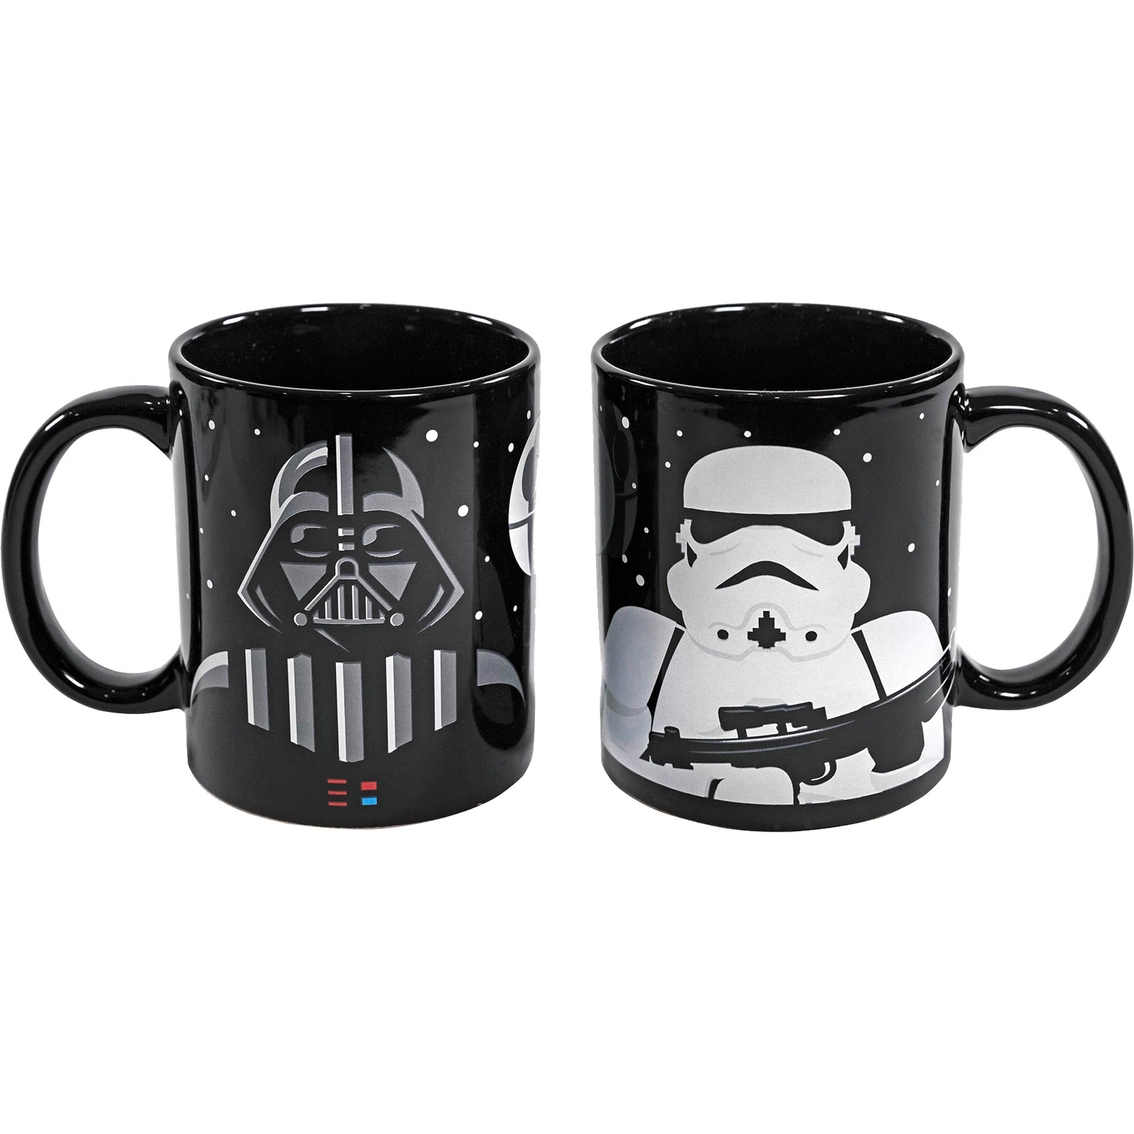 Star Wars Darth Vader Coffee Maker with 2 Mugs - Image 4 of 6